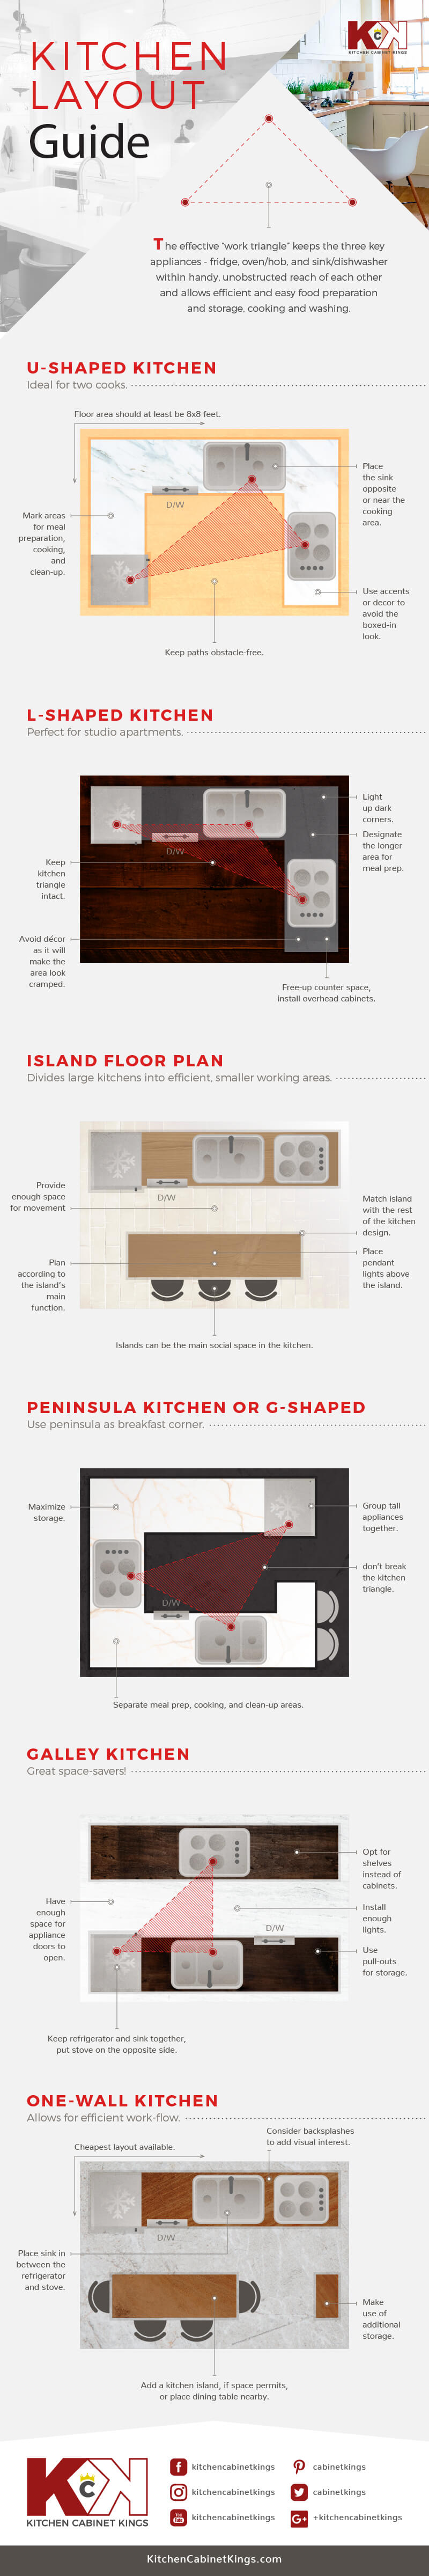 Kitchen Layout Cheat Sheet [Infographic] - Kitchen Cabinet Kings